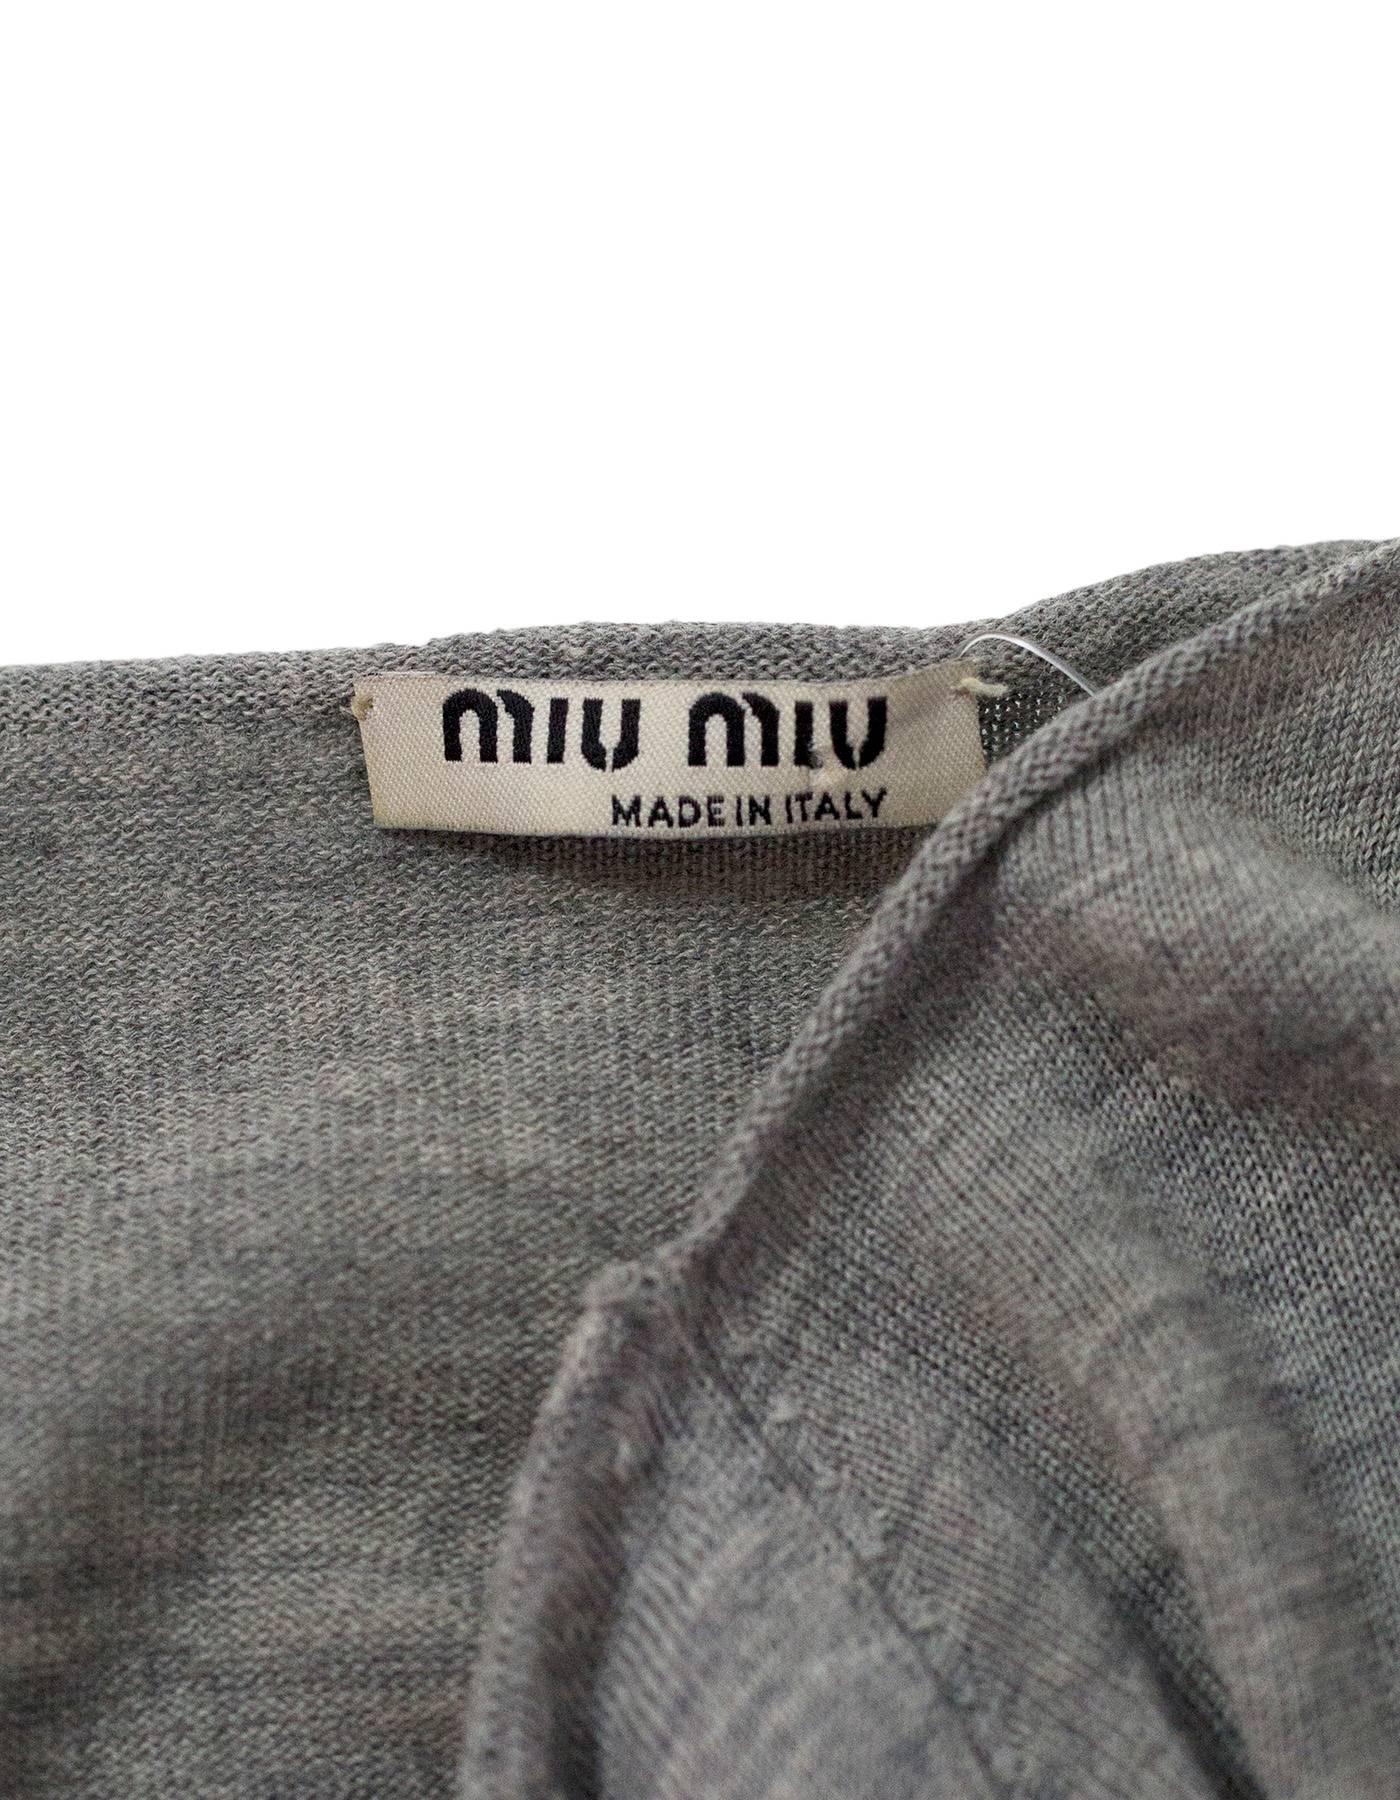 Women's Miu Miu Grey Long Knit Tunic w/ Bow sz M/L